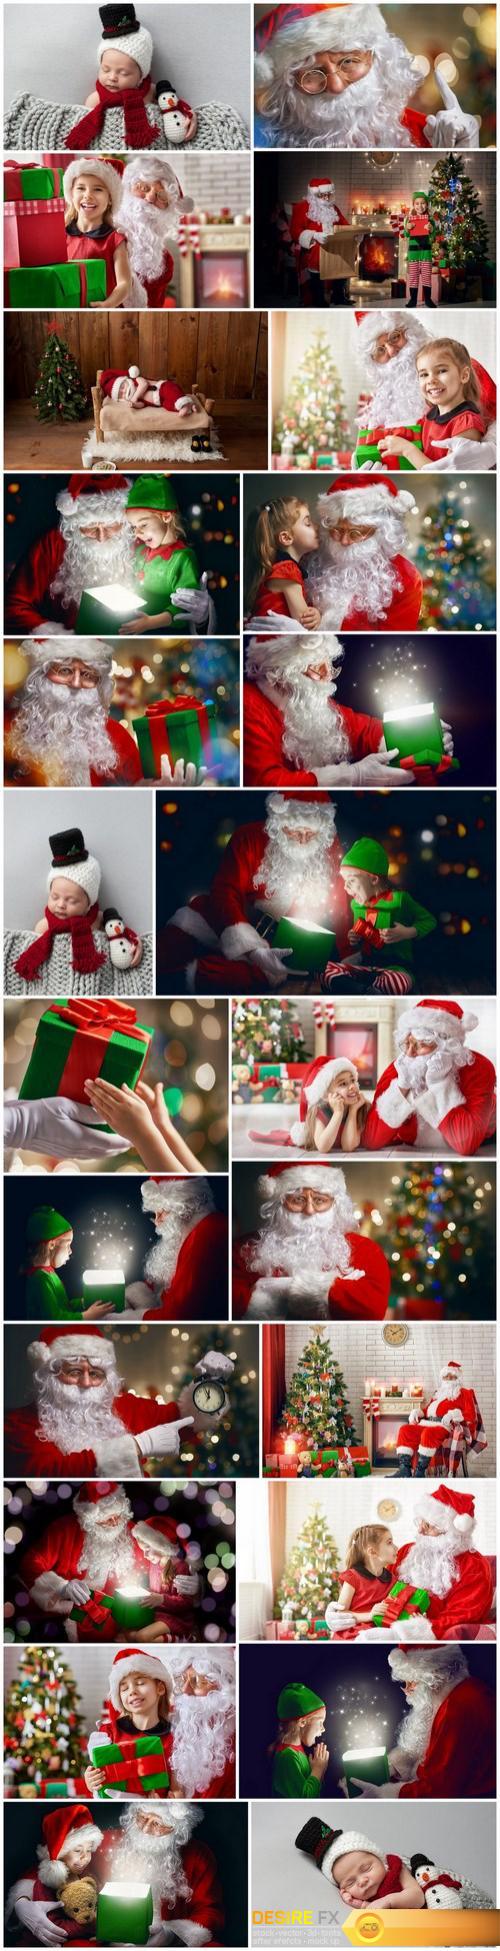 Dear Santa, happy kids and Christmas gifts - 24xUHQ JPEG Photo Stock